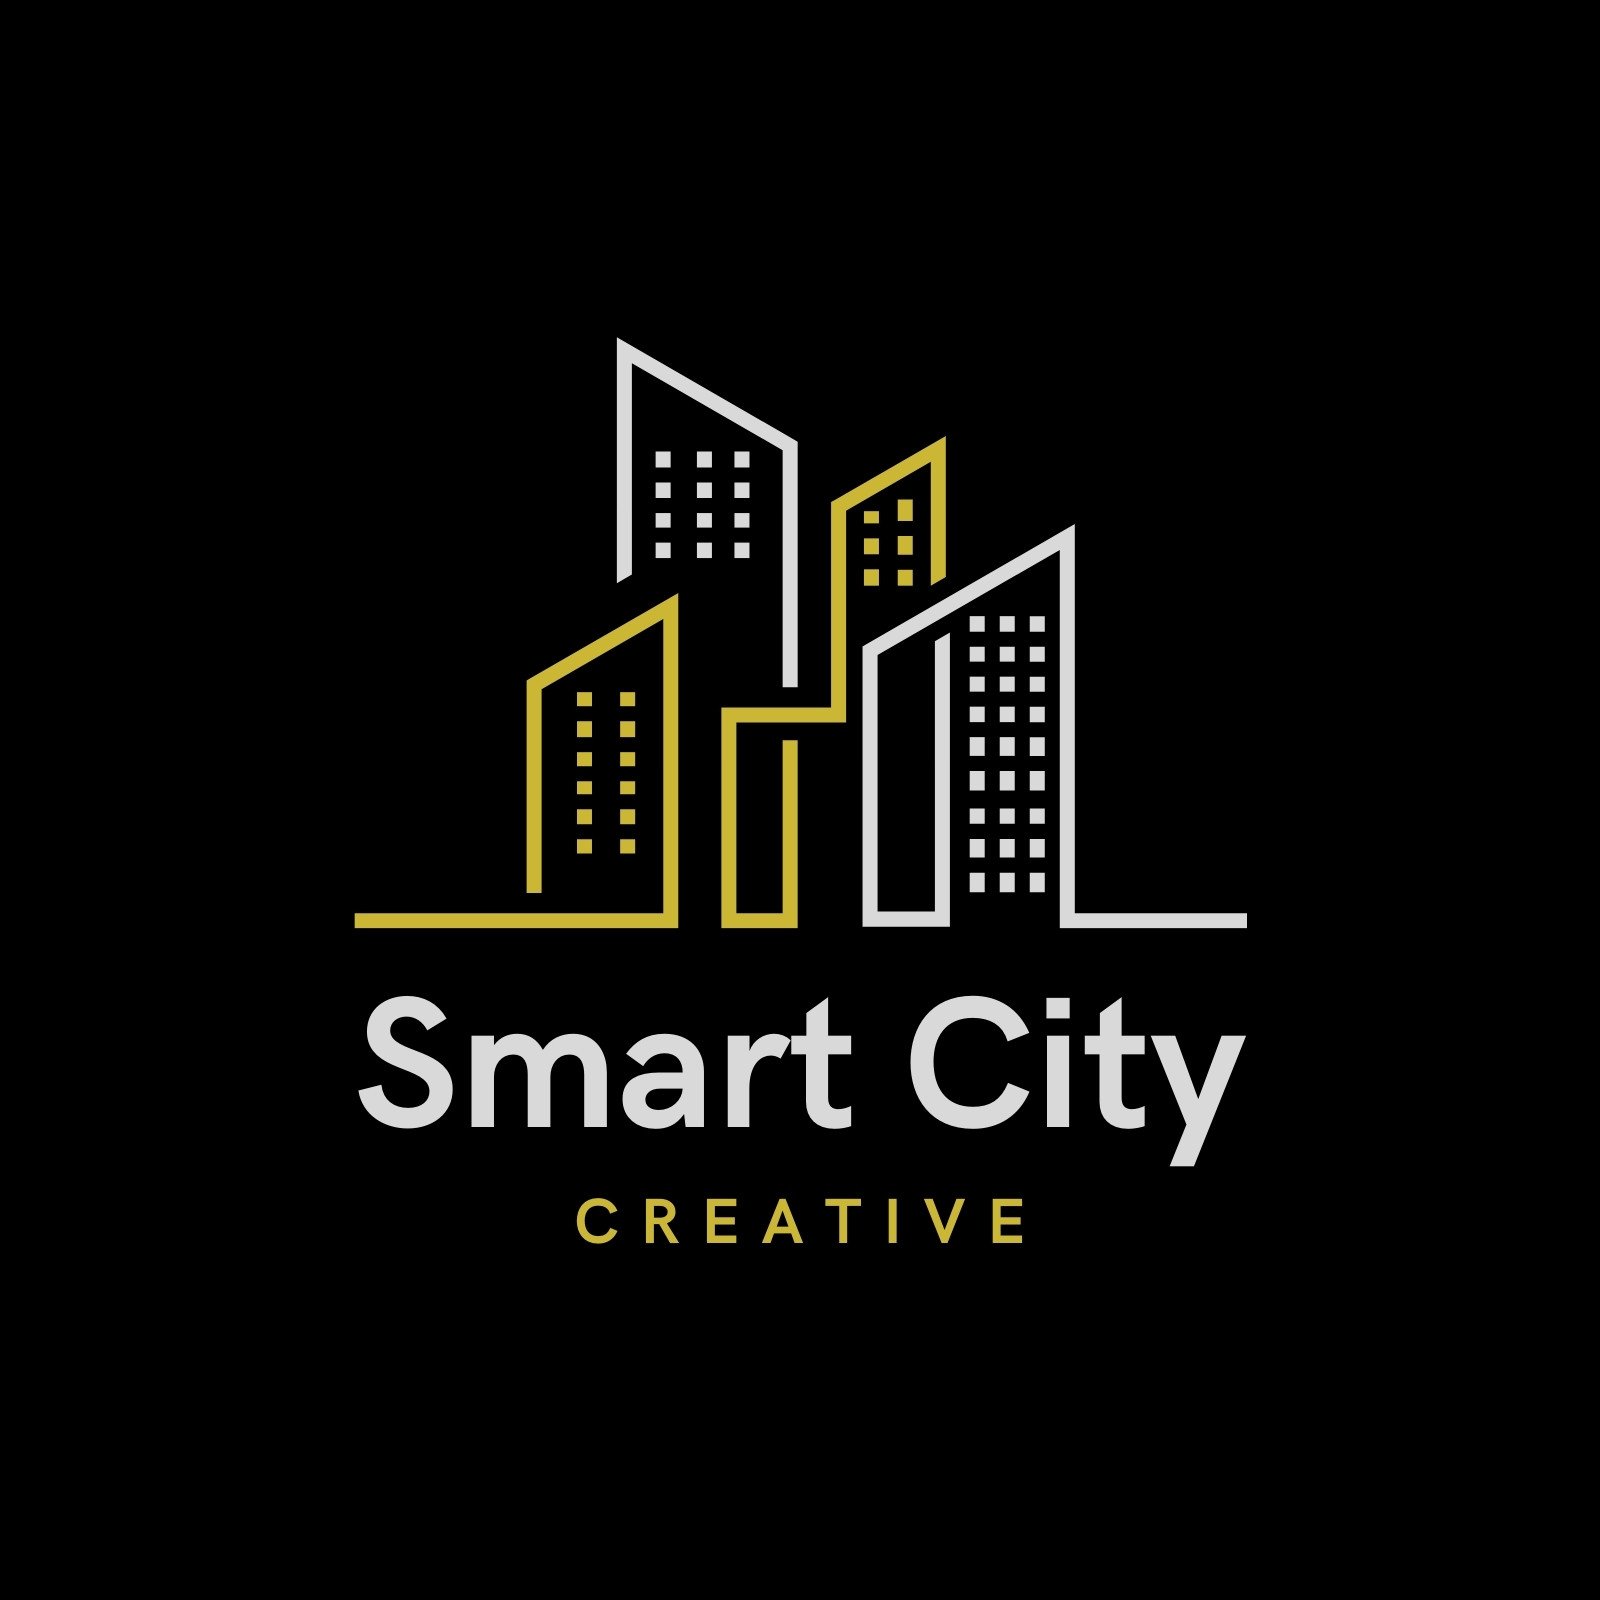 Smart city logo template design Royalty Free Vector Image